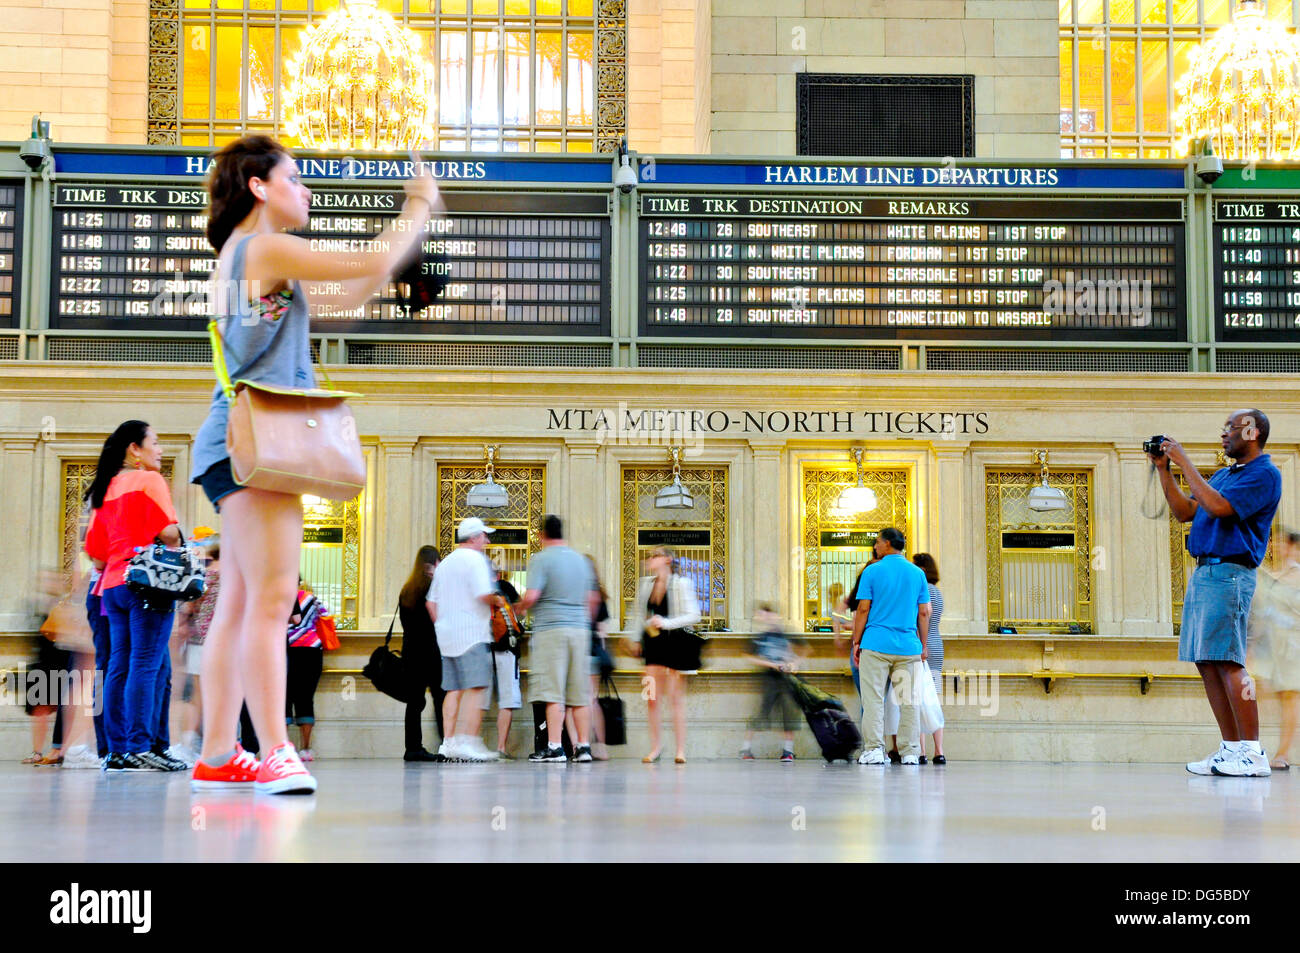 Grand Hall of Grand Central Terminal, Metro North ticket counter, Midtown Manhattan, New York City, USA Stock Photo